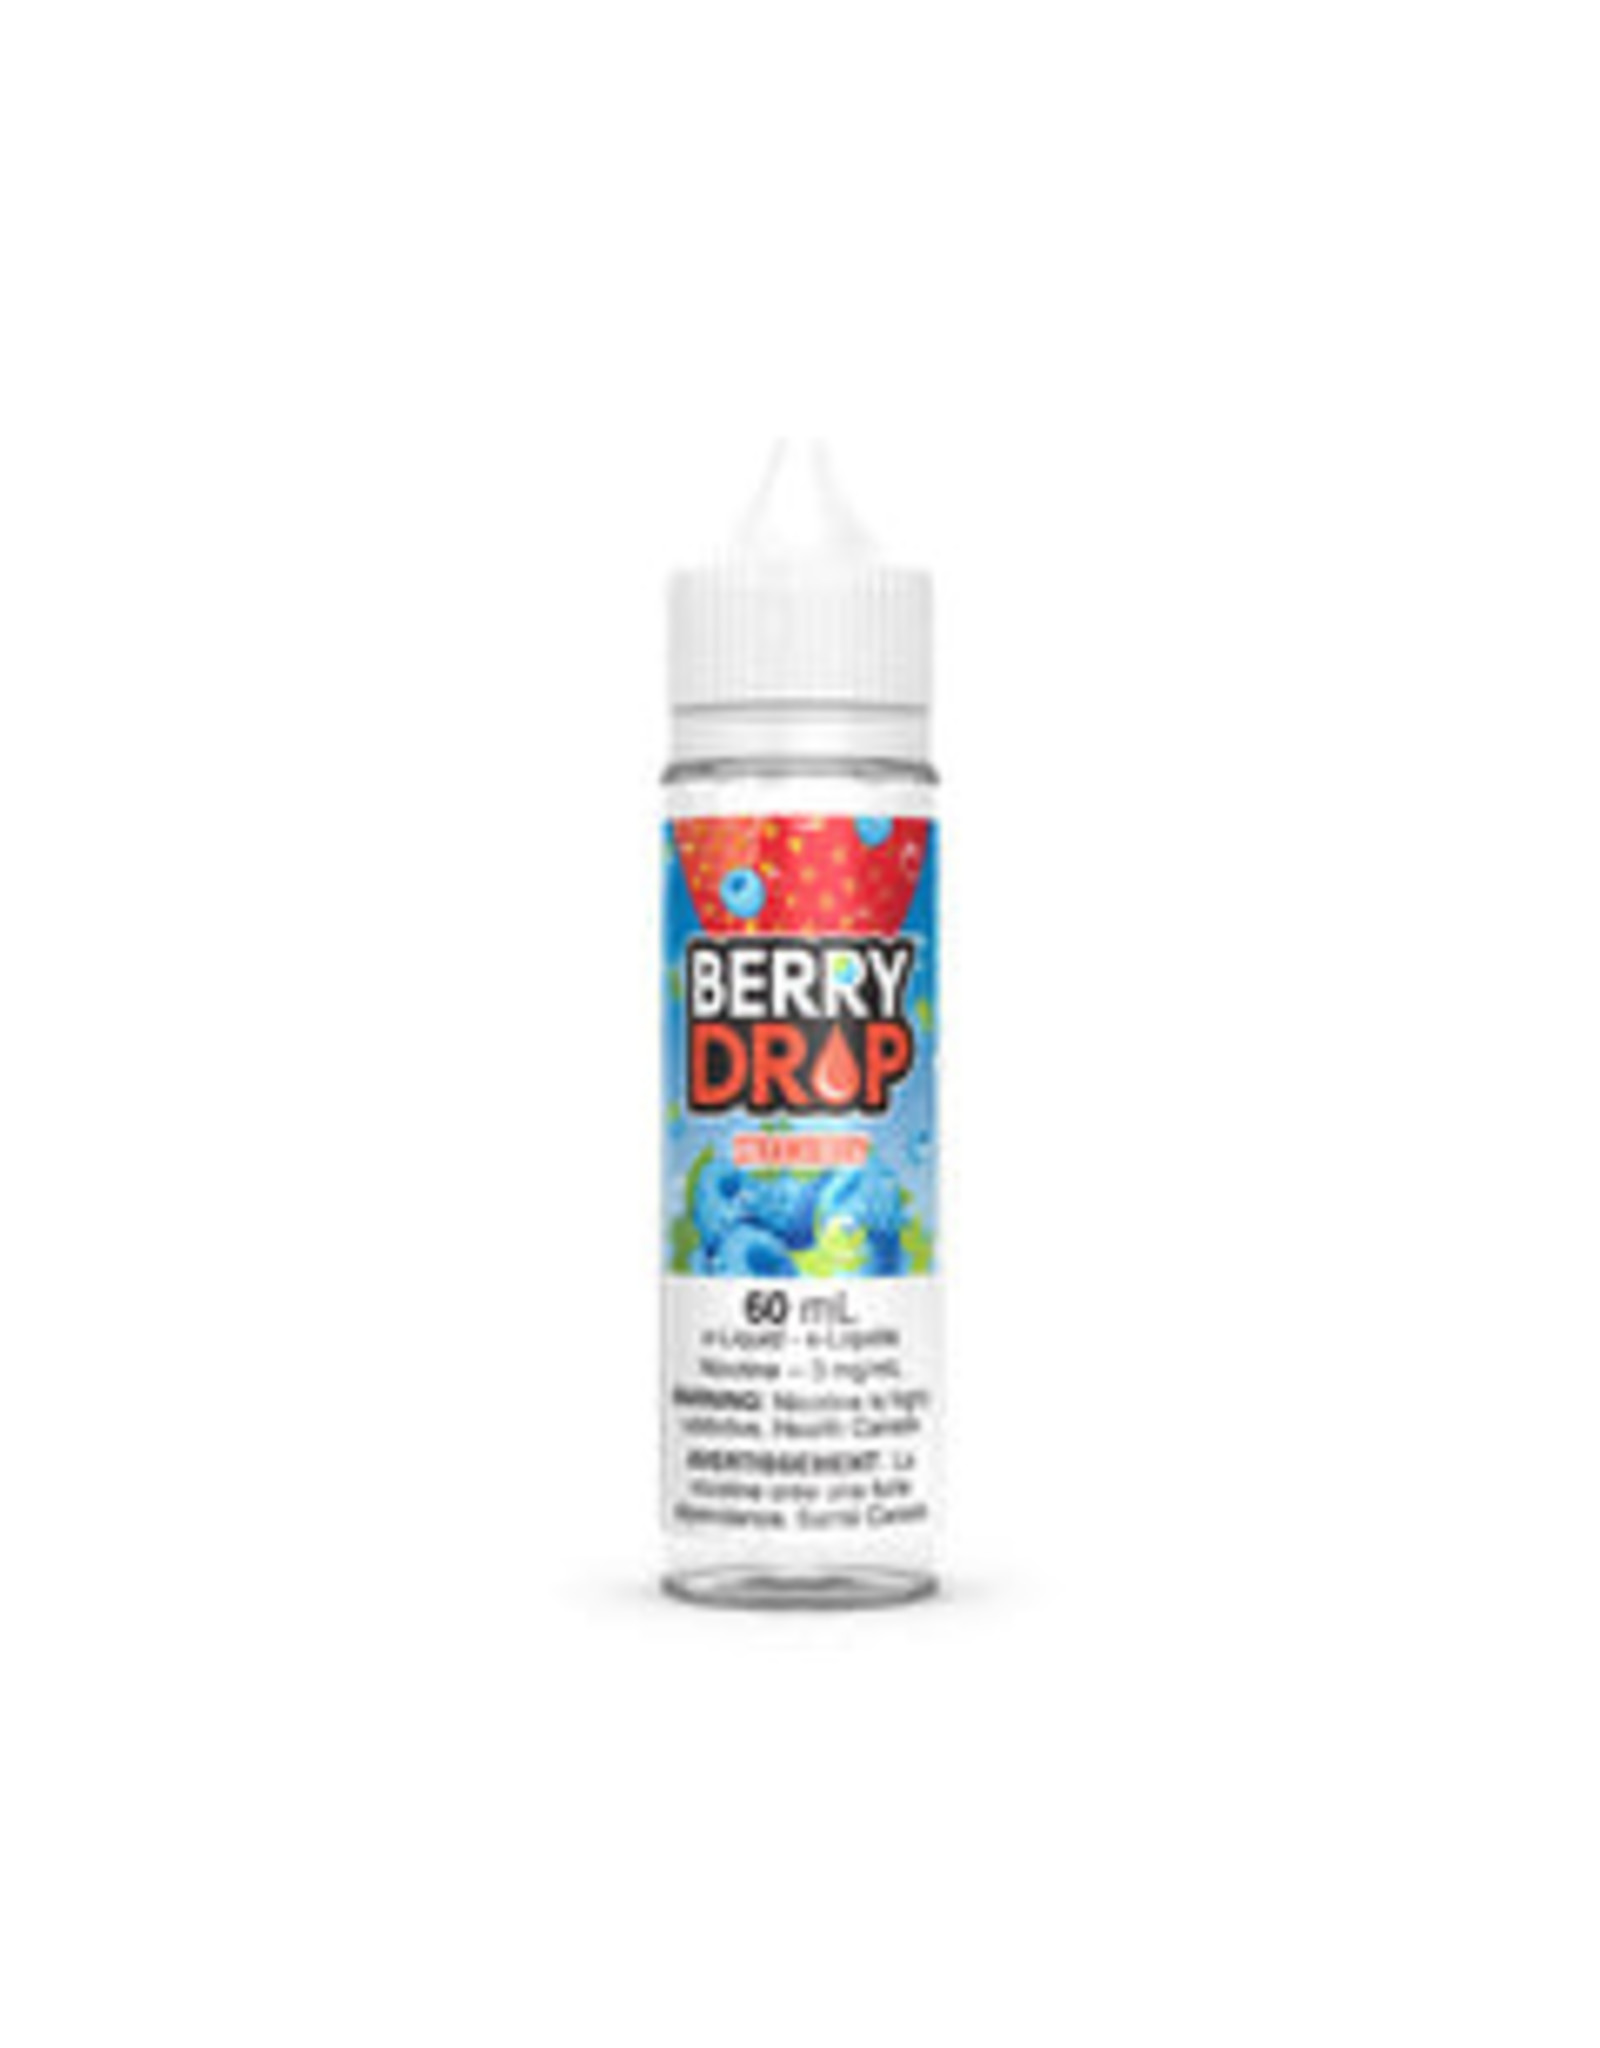 Lemon Drop Berry Drop E-juice (60mL)